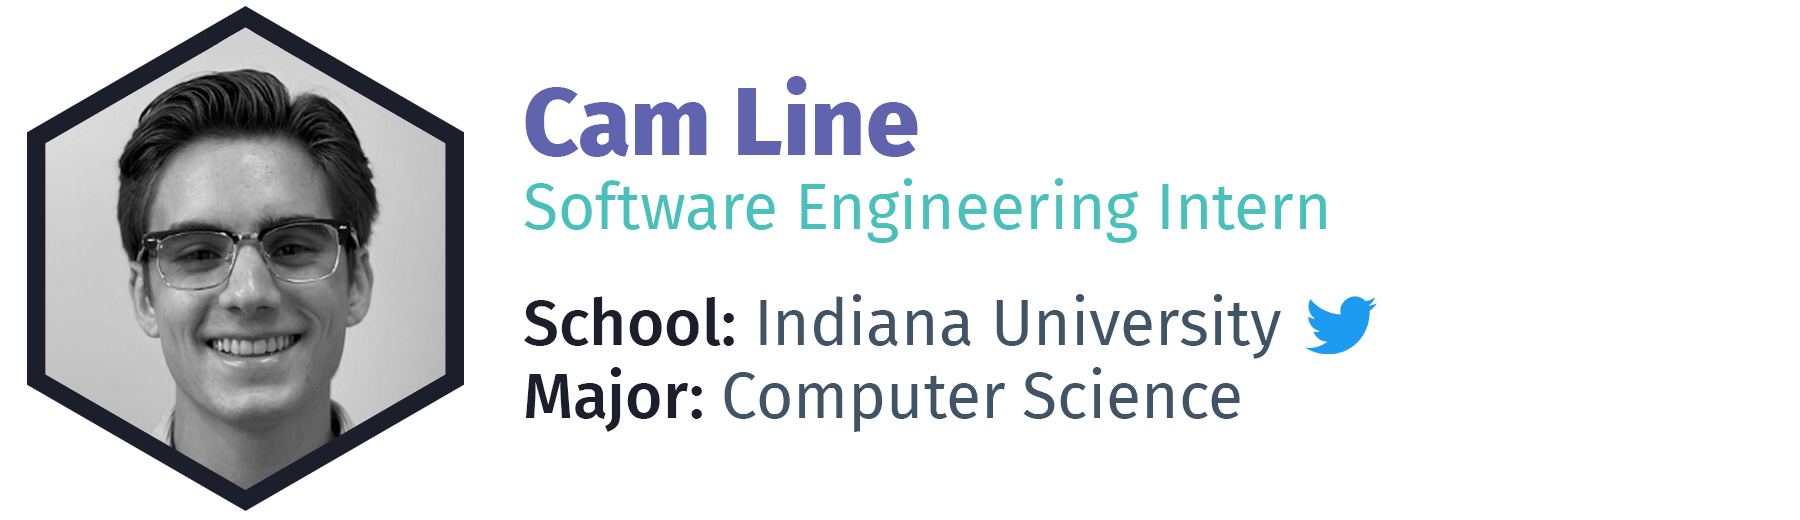 Cam Line - Software Engineering Intern